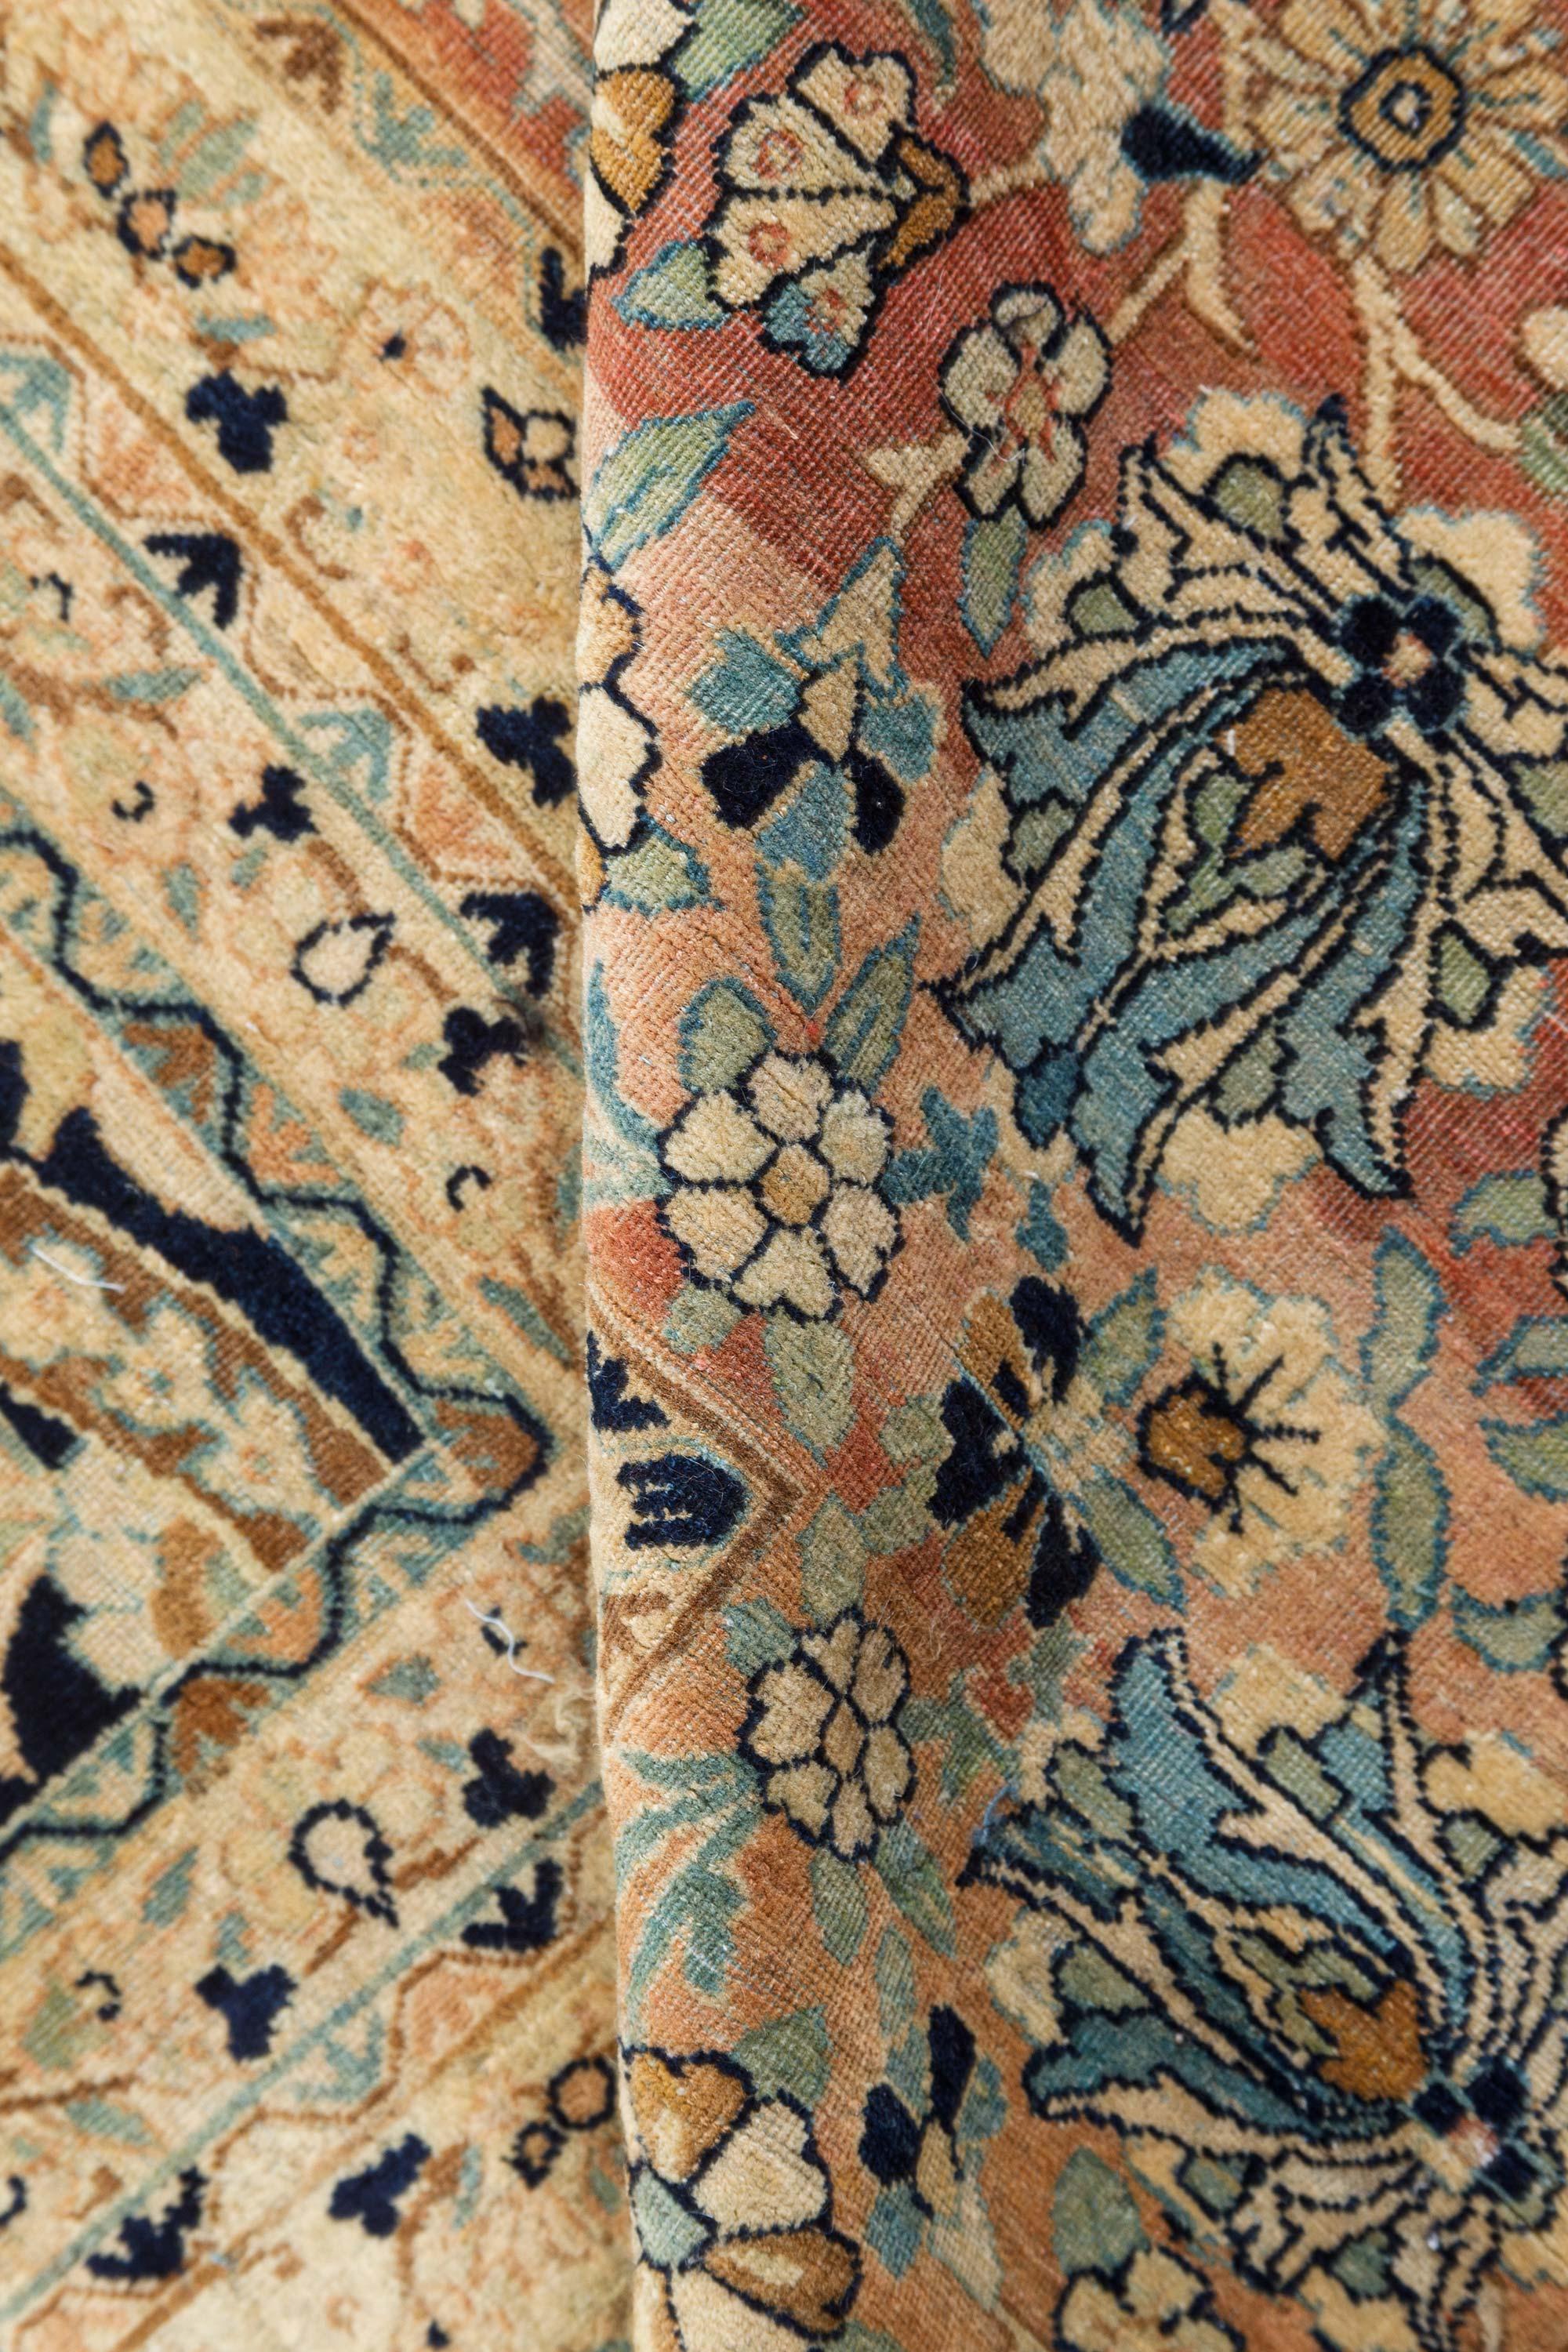 Antique Persian Kirman handmade wool carpet
Size: 13'6